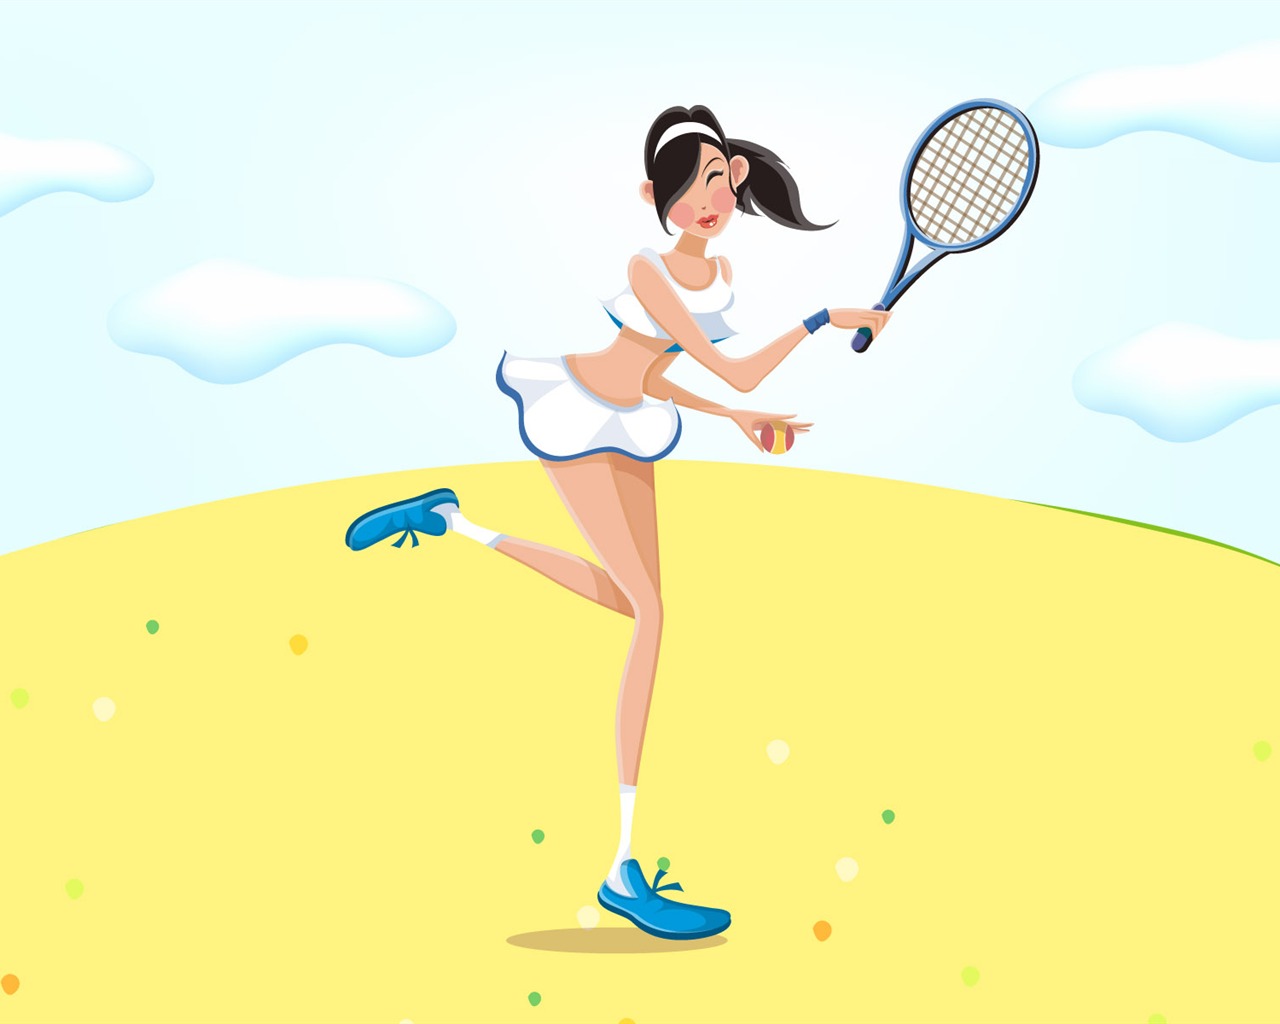 Women's leisure sports vector #3 - 1280x1024